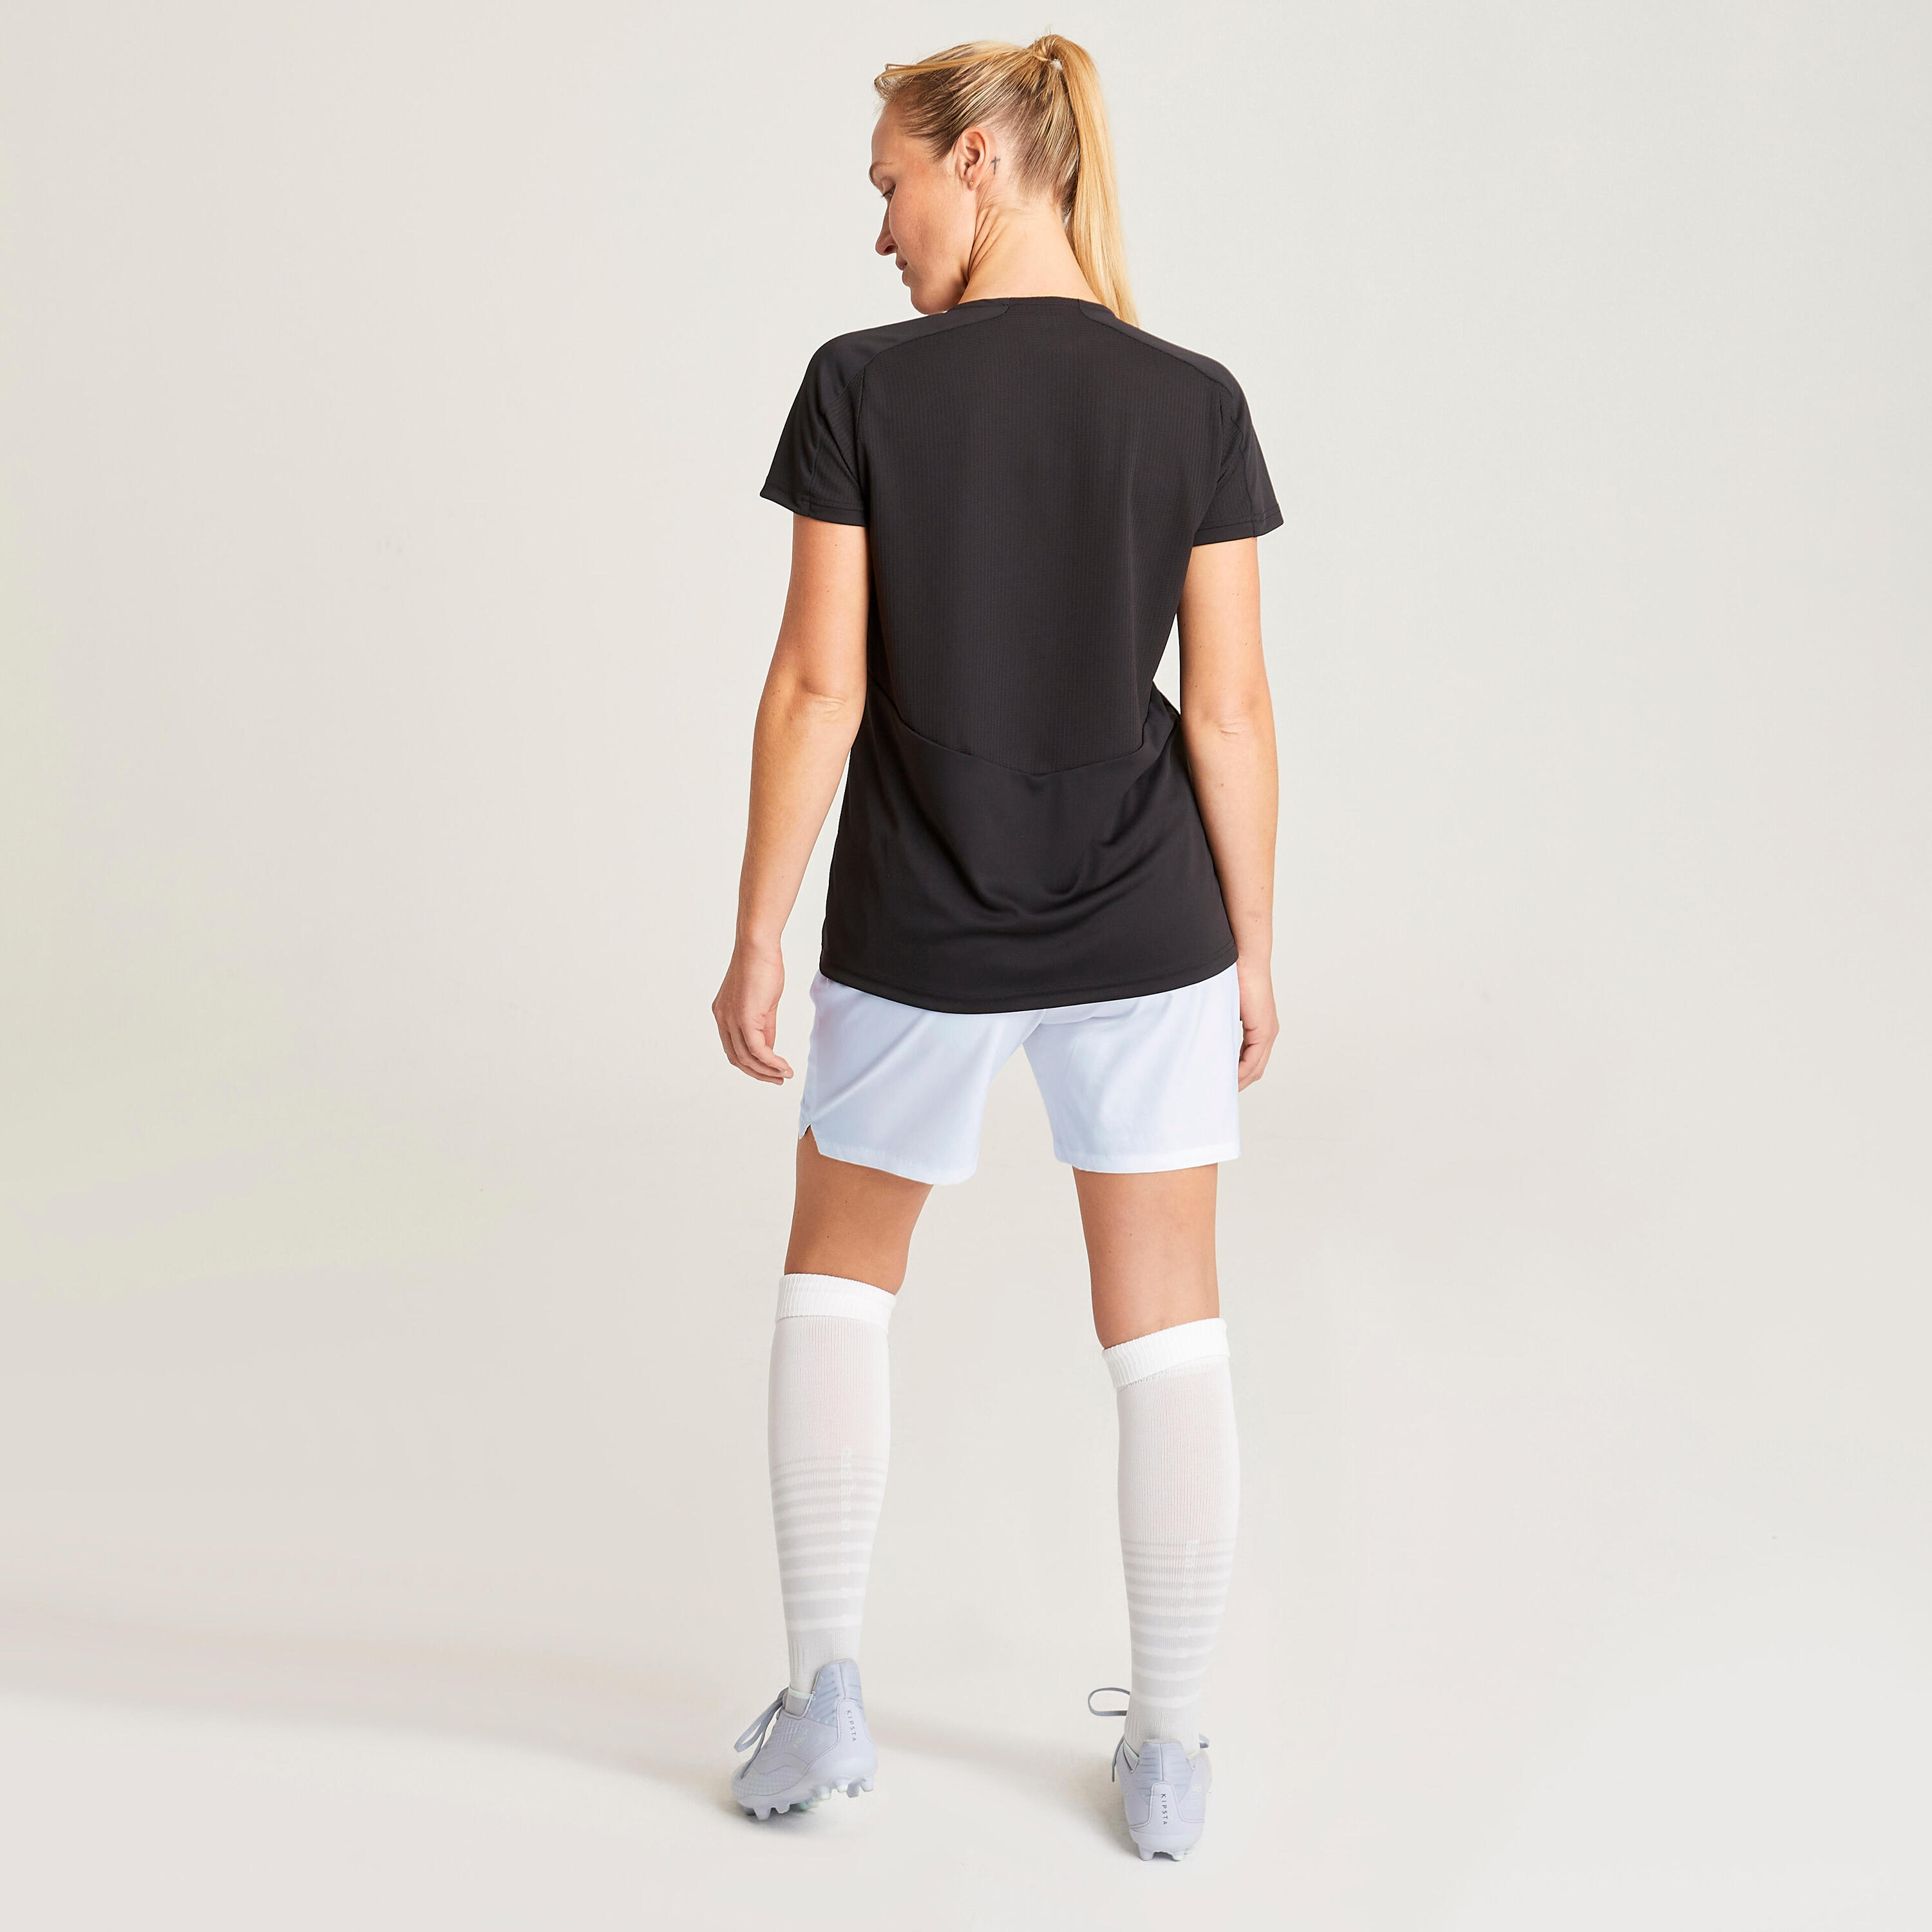 Women's Plain Football Shirt - Black 13/29